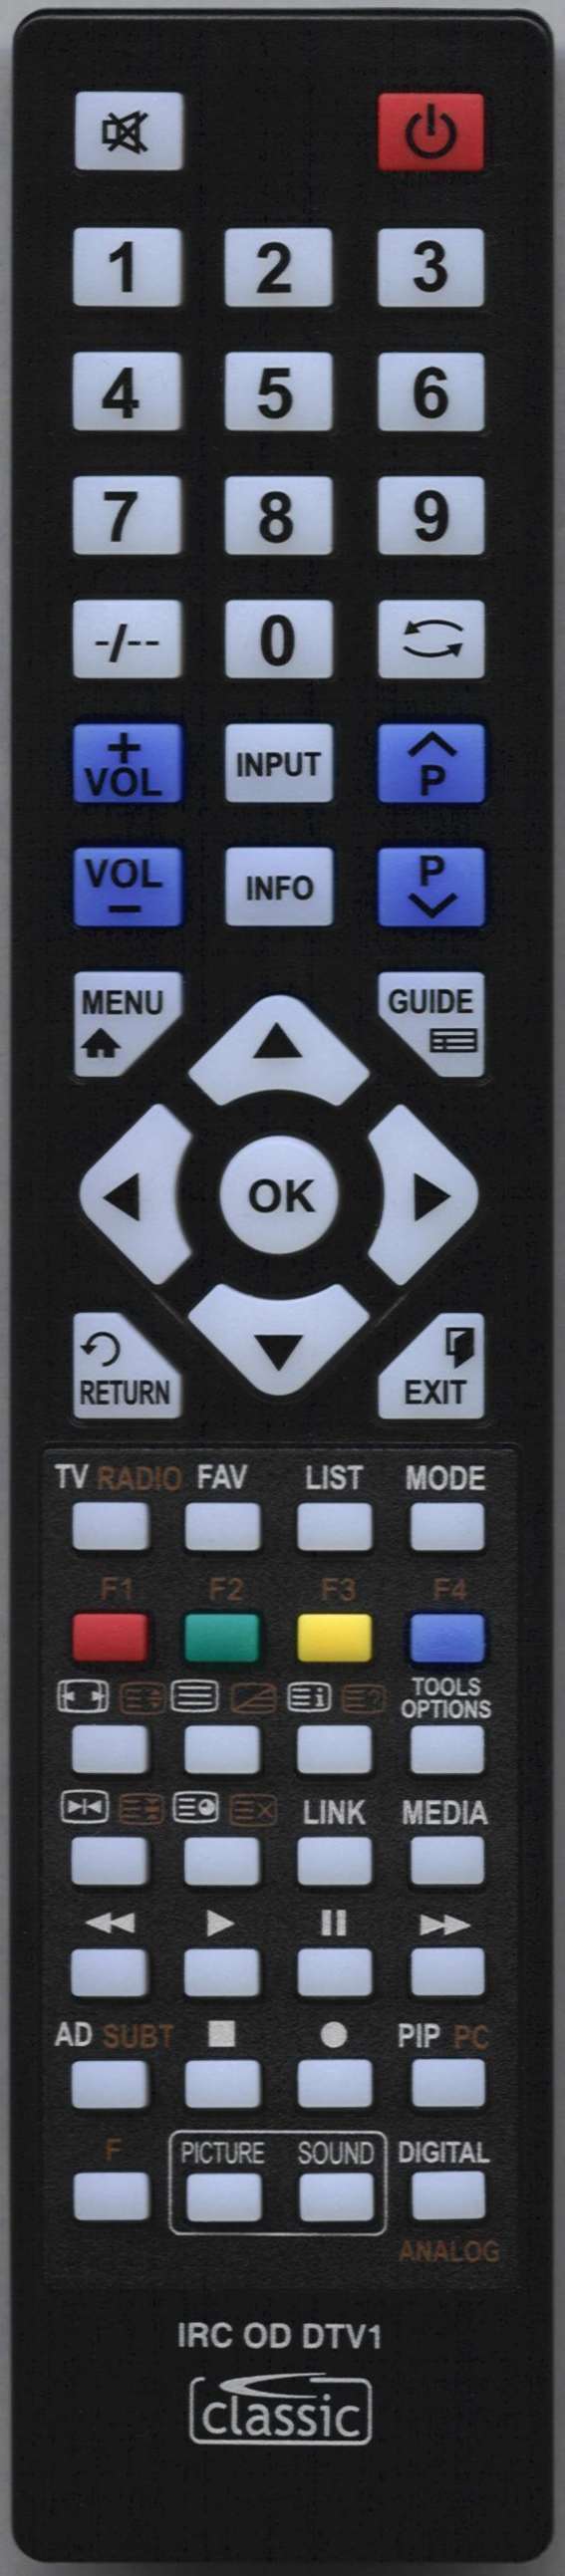 Beko 284239 NS Remote Control